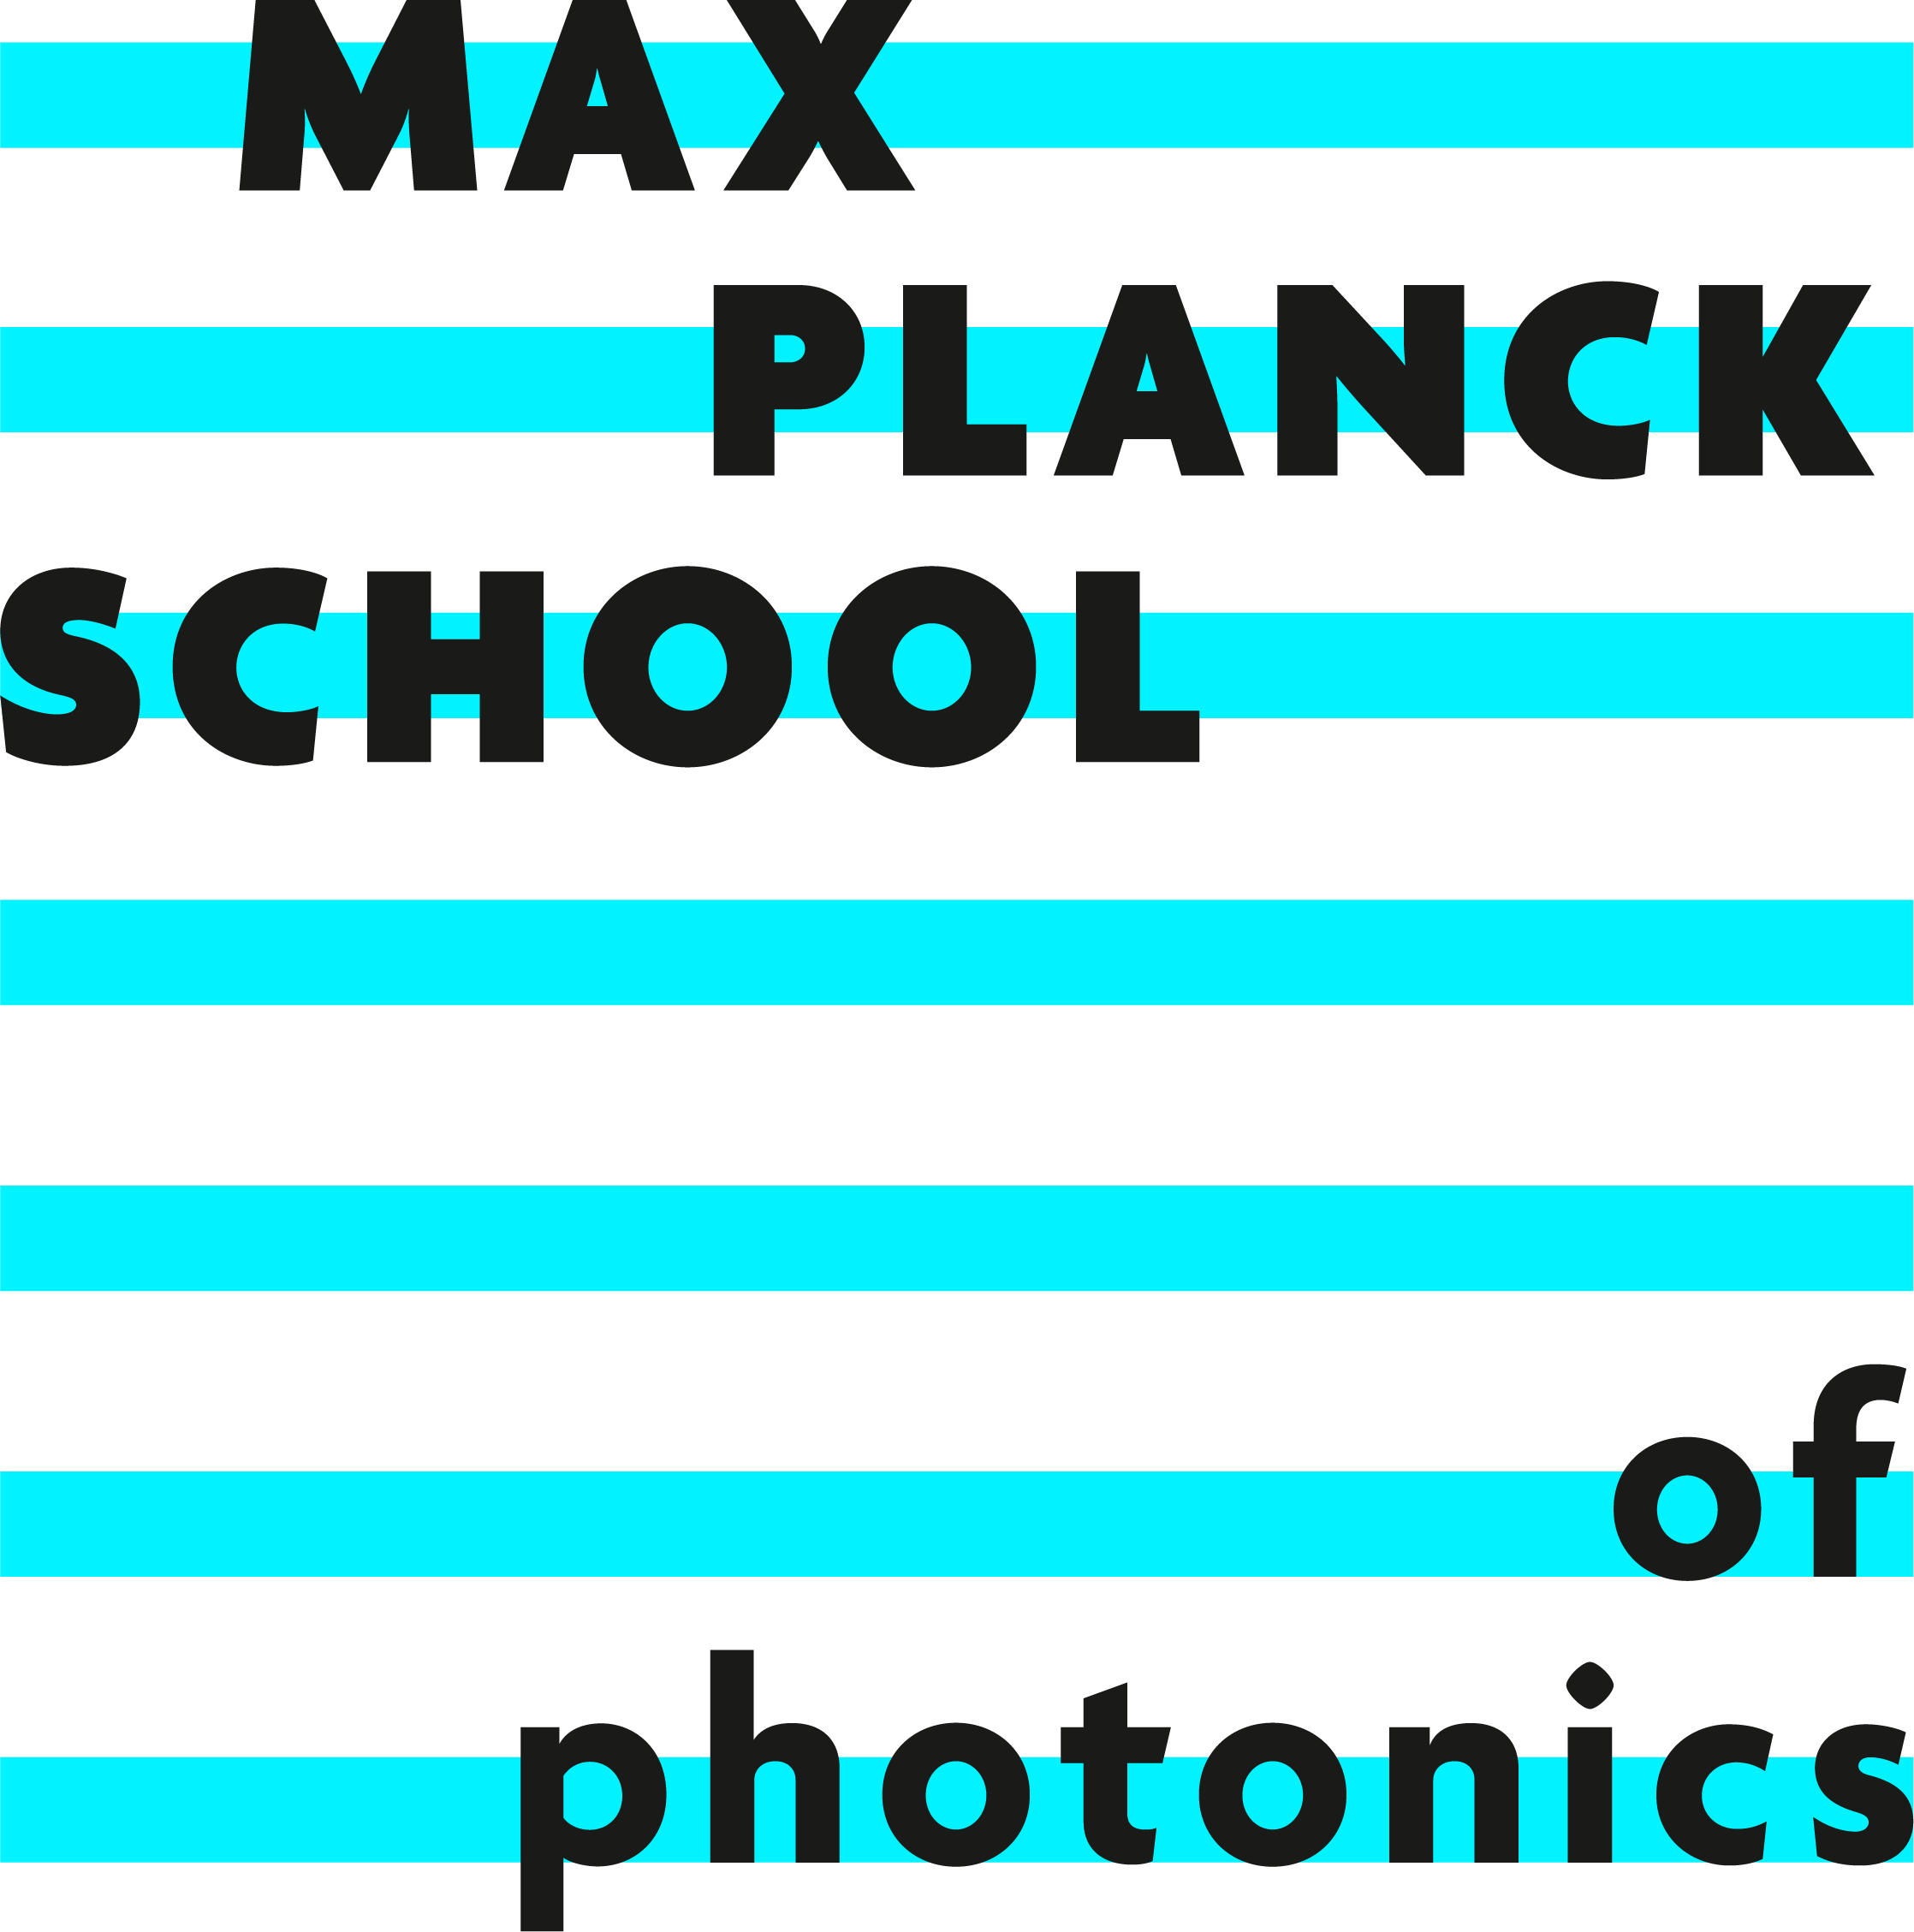 Logo of the Max Planck School of Photonics (MPSP).